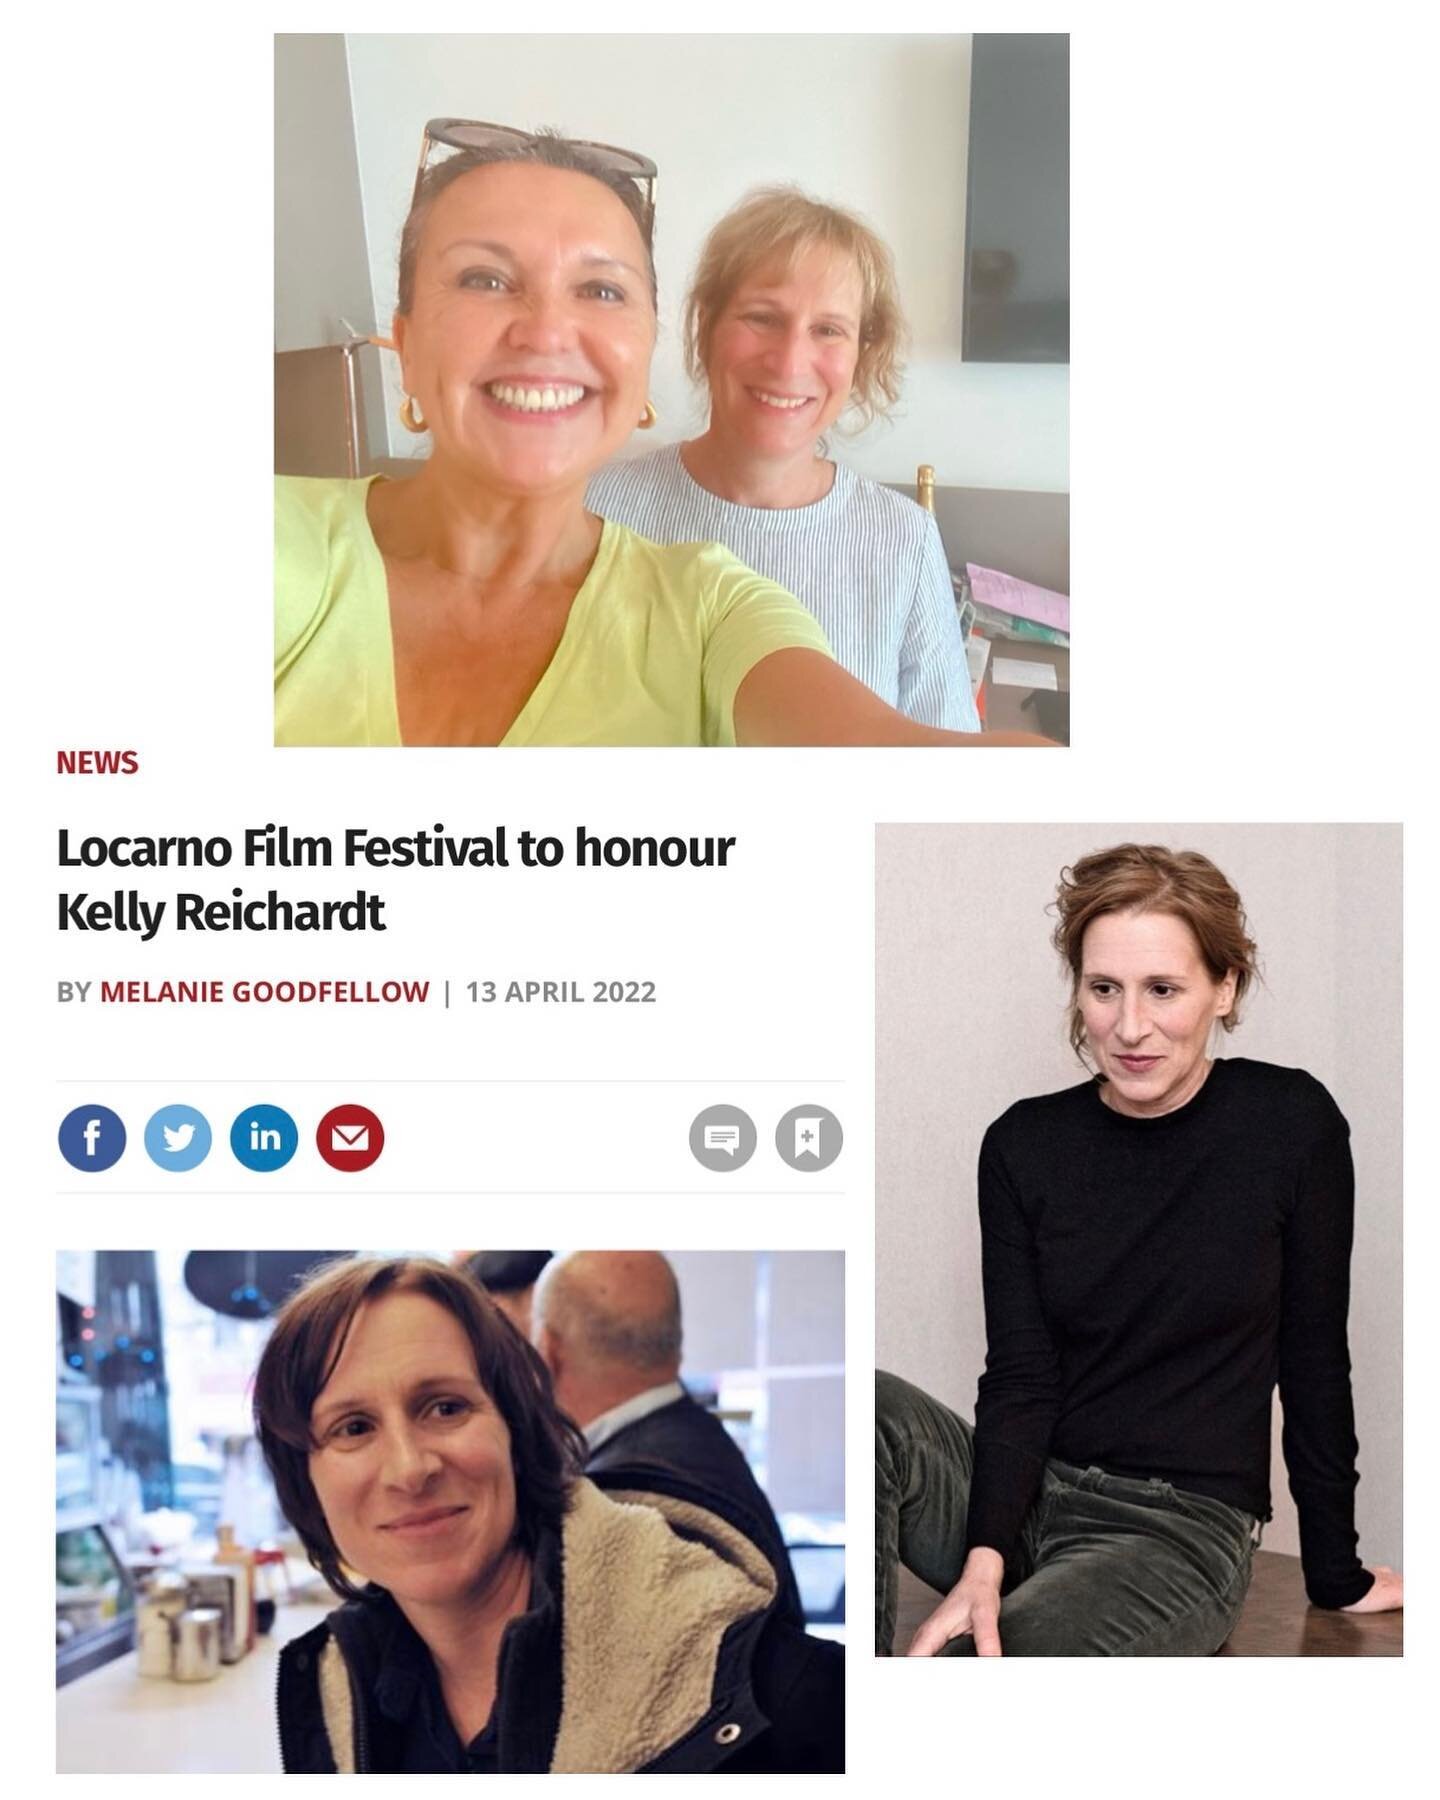 It was a pleasure to meet you Kelly Reichardt and congratulations on the Locarno&rsquo;s Film Festival recognition of your work.  #locarnofilmfestival #filmawards #kellyreichardt #beautycorner #waxing #handsandfeet #gelpolish #massagetherapy #reflexo